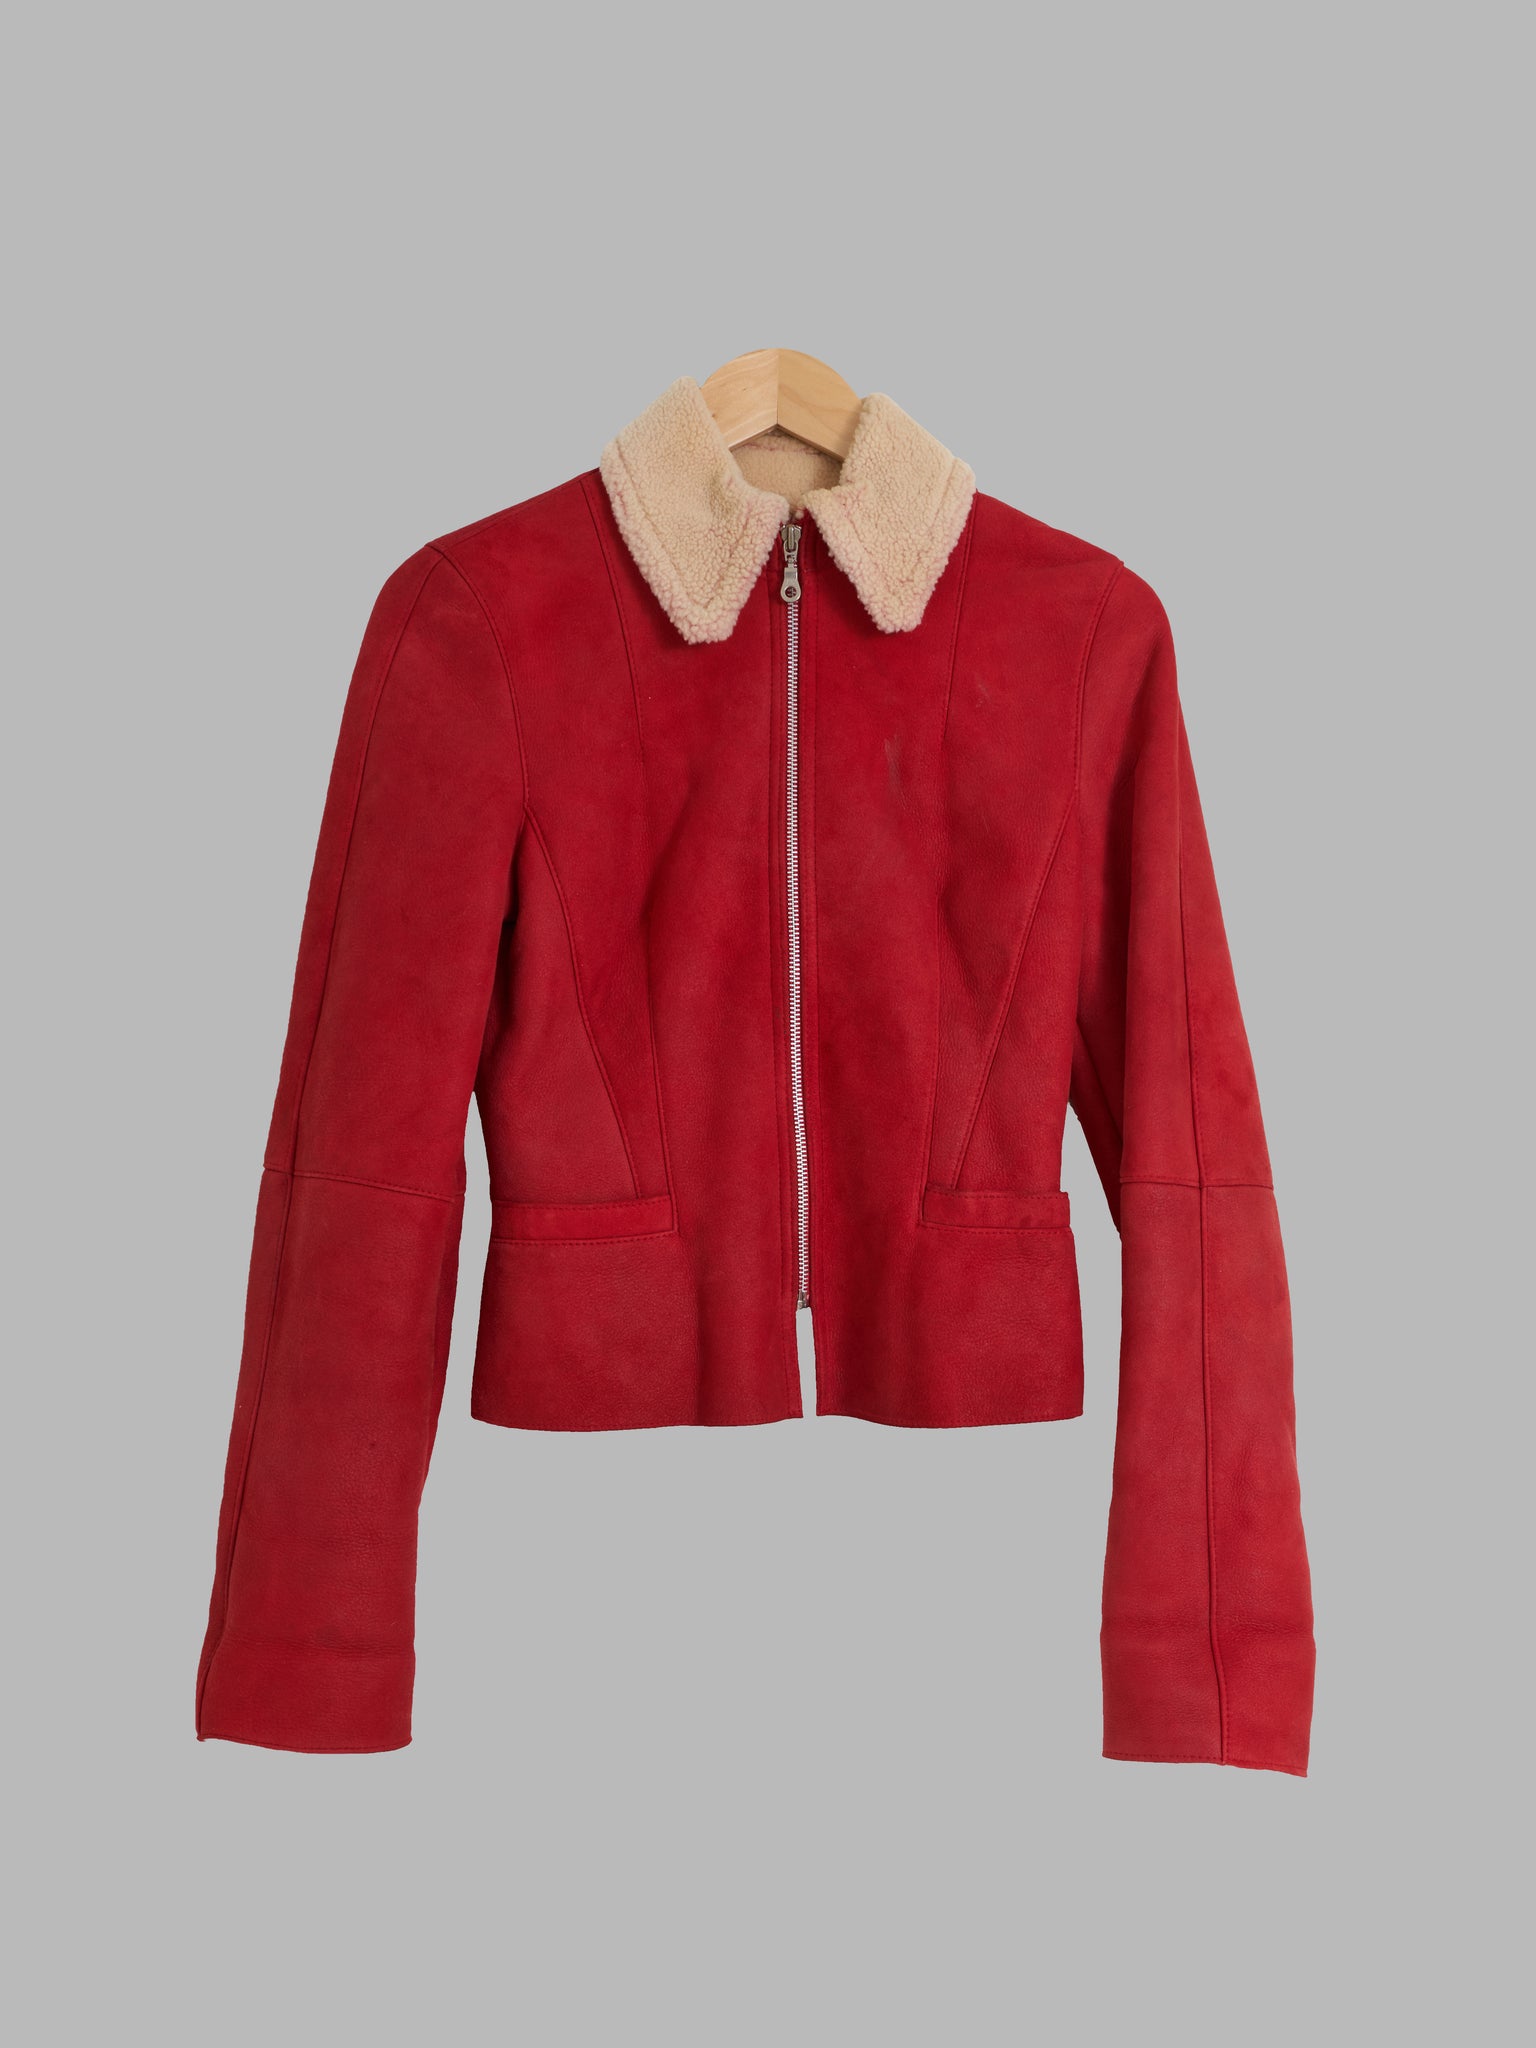 vintage Marsil Paris red leather mouton zip jacket - womens 36 S XS